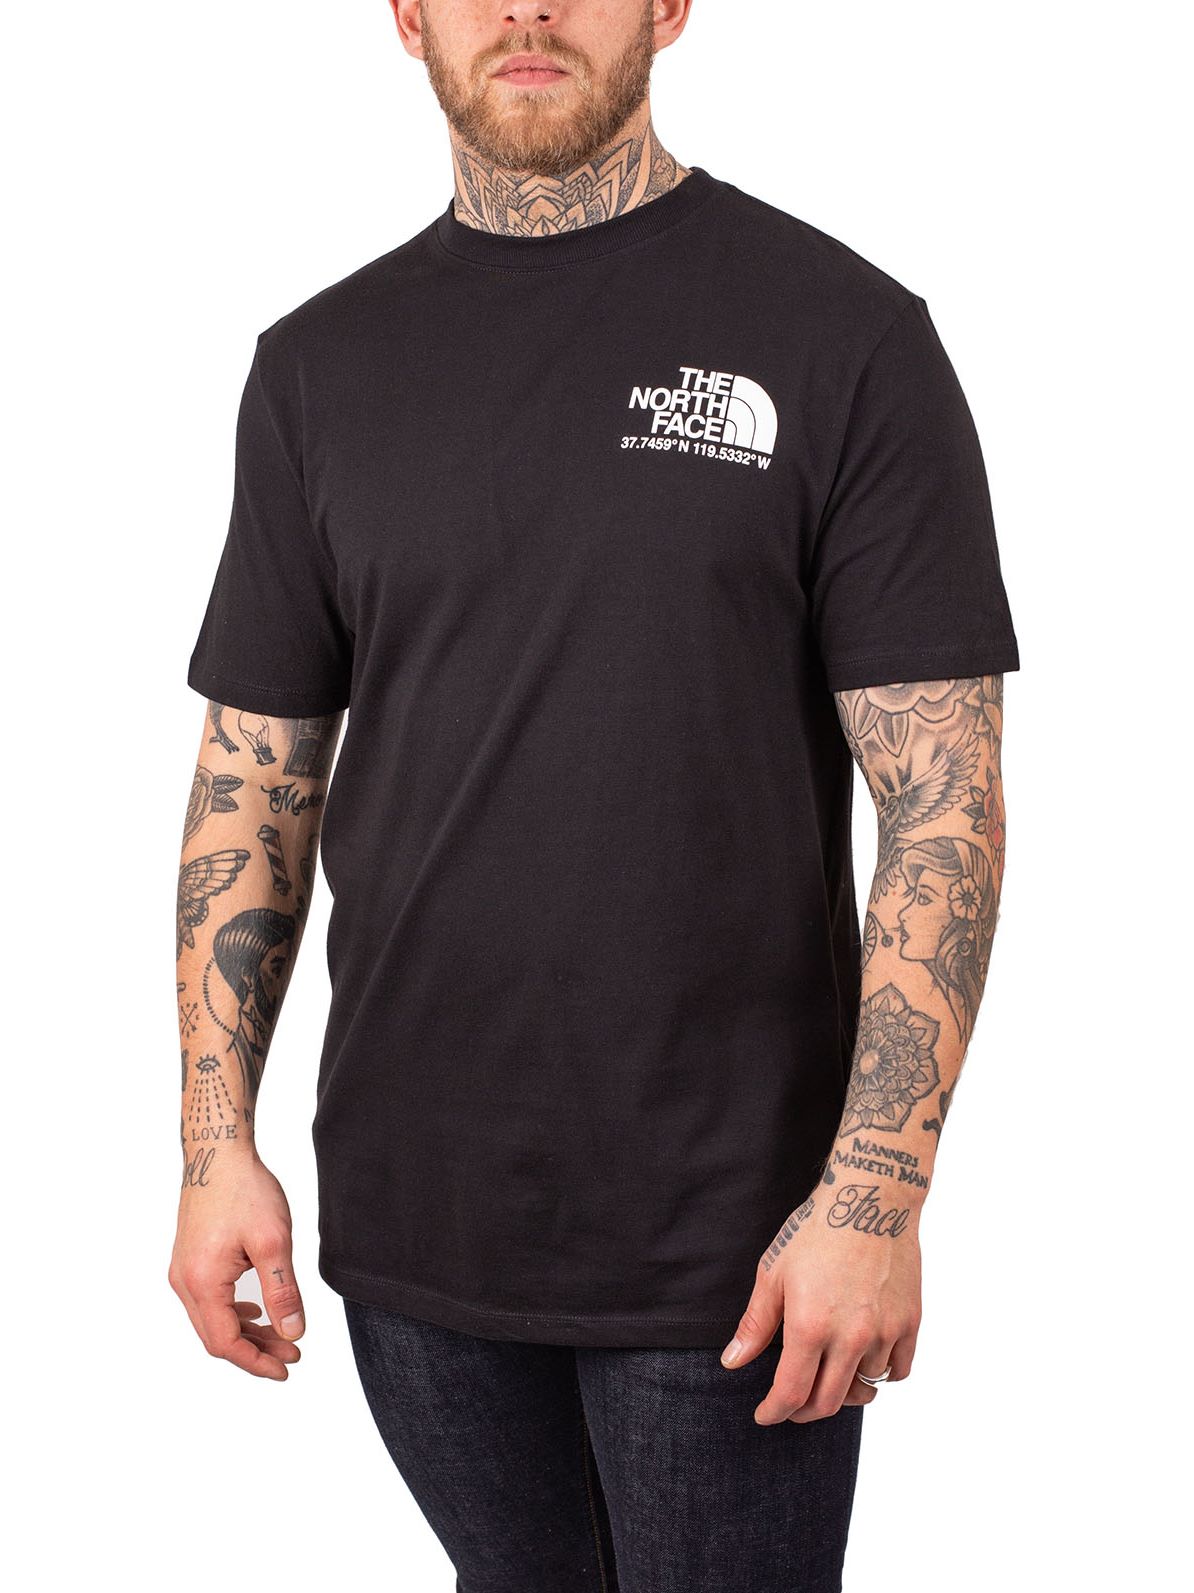 The North Face Coordinates T-Shirt in Black | Dapper Street